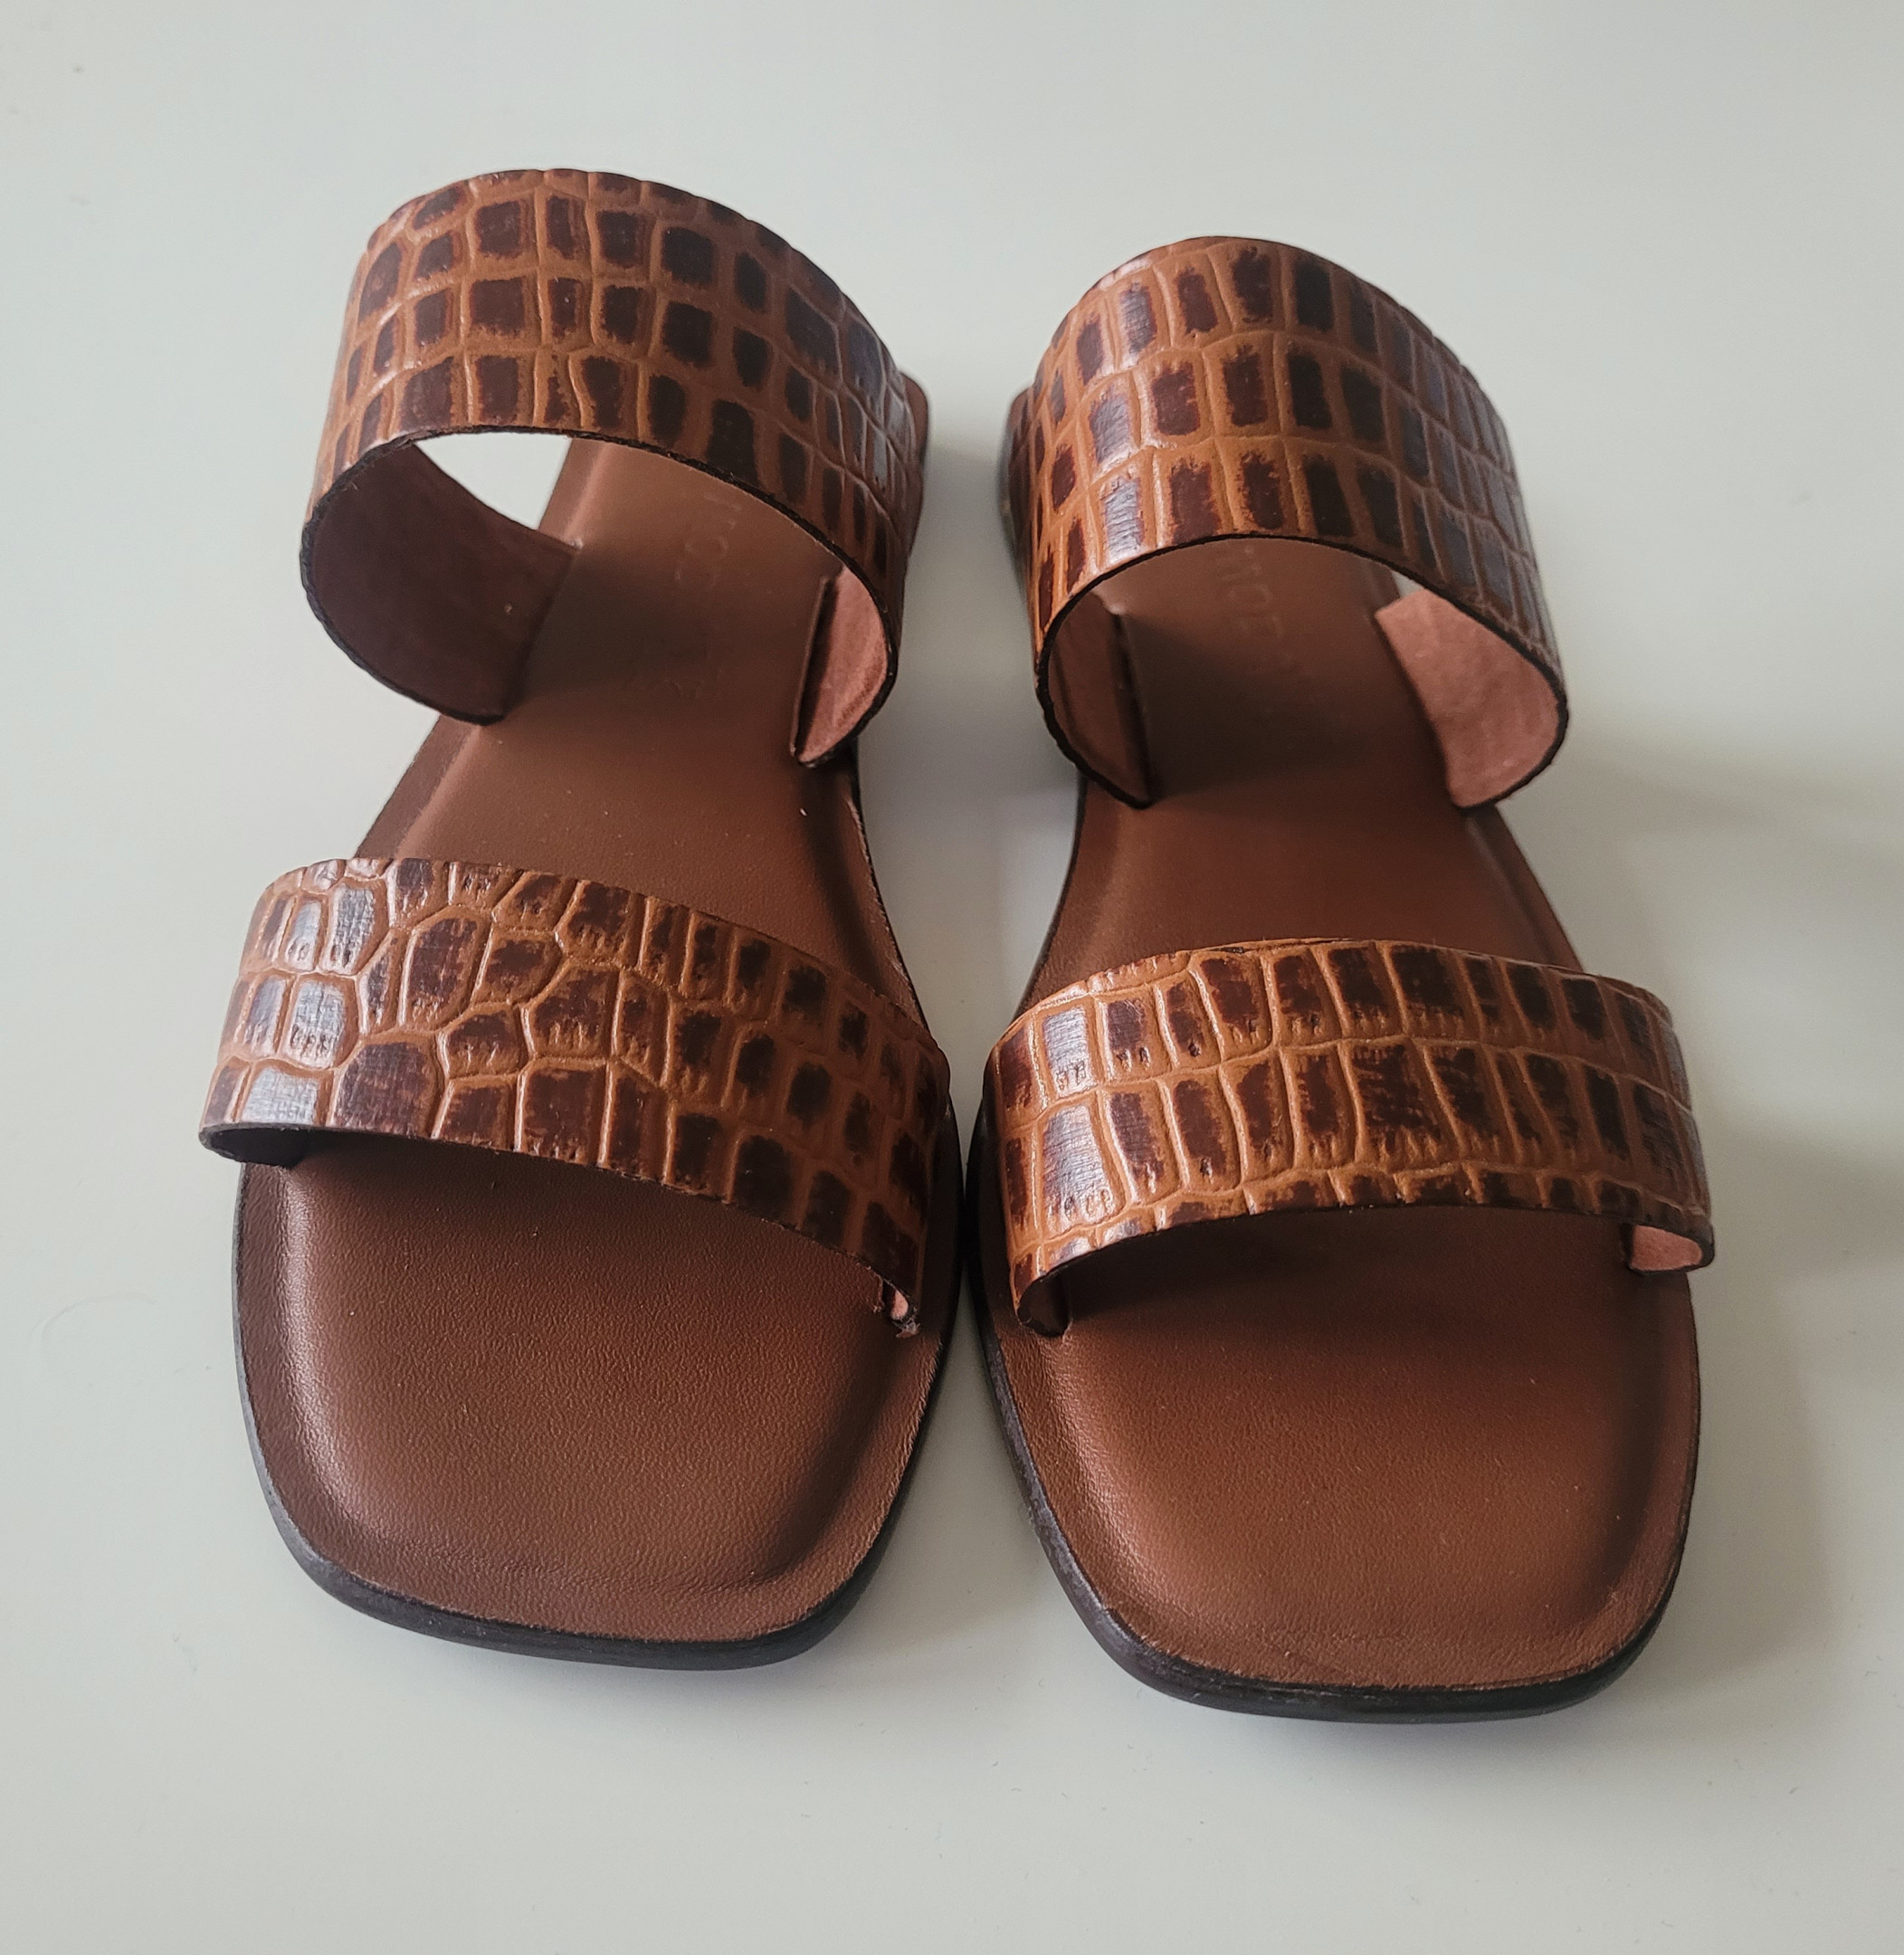 Vero Moda leather sandals Size 37